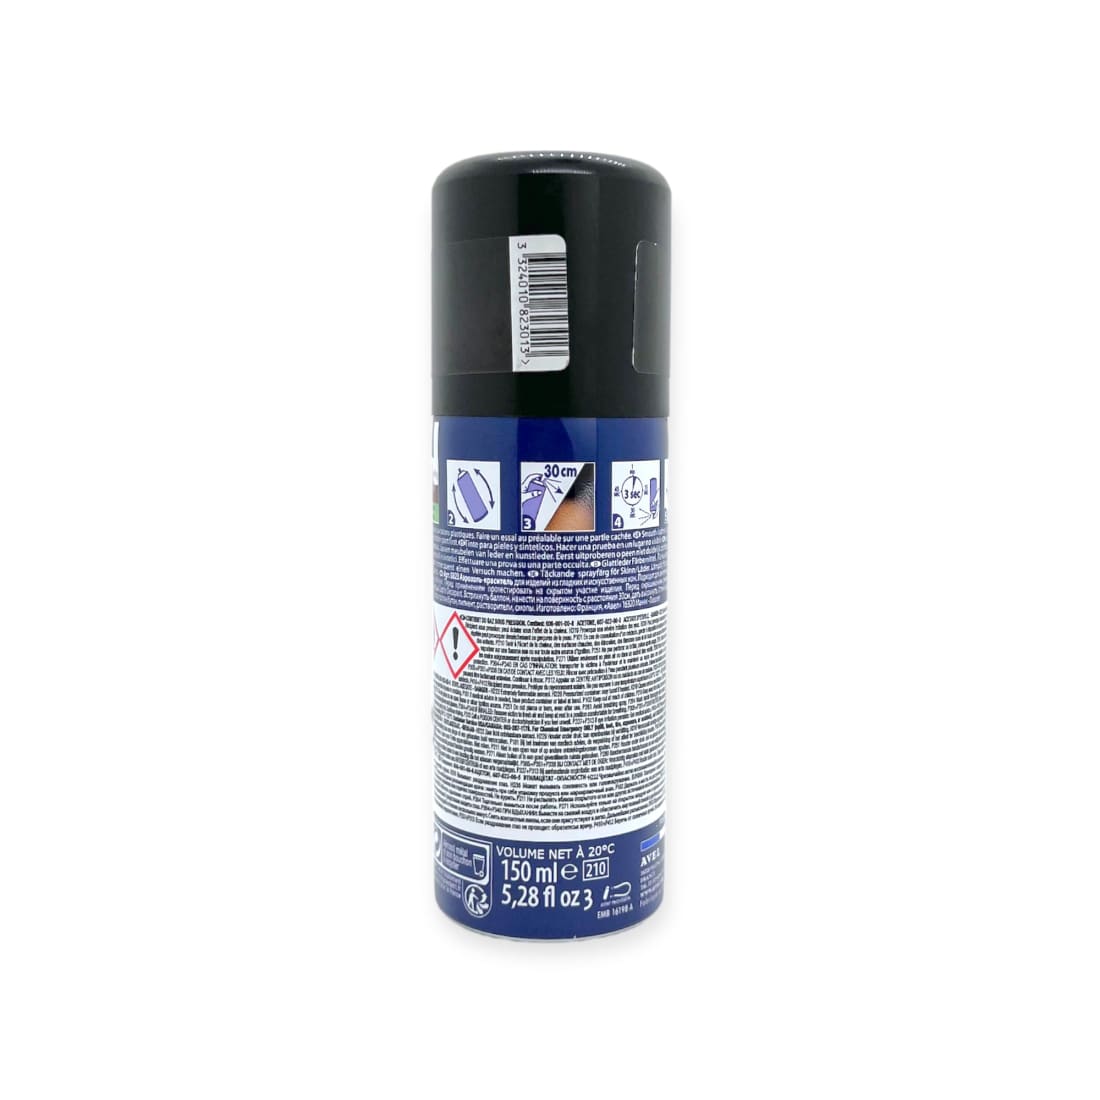 Spray Tenax Teinture Havane Moyen - Saphir - 150 ml -